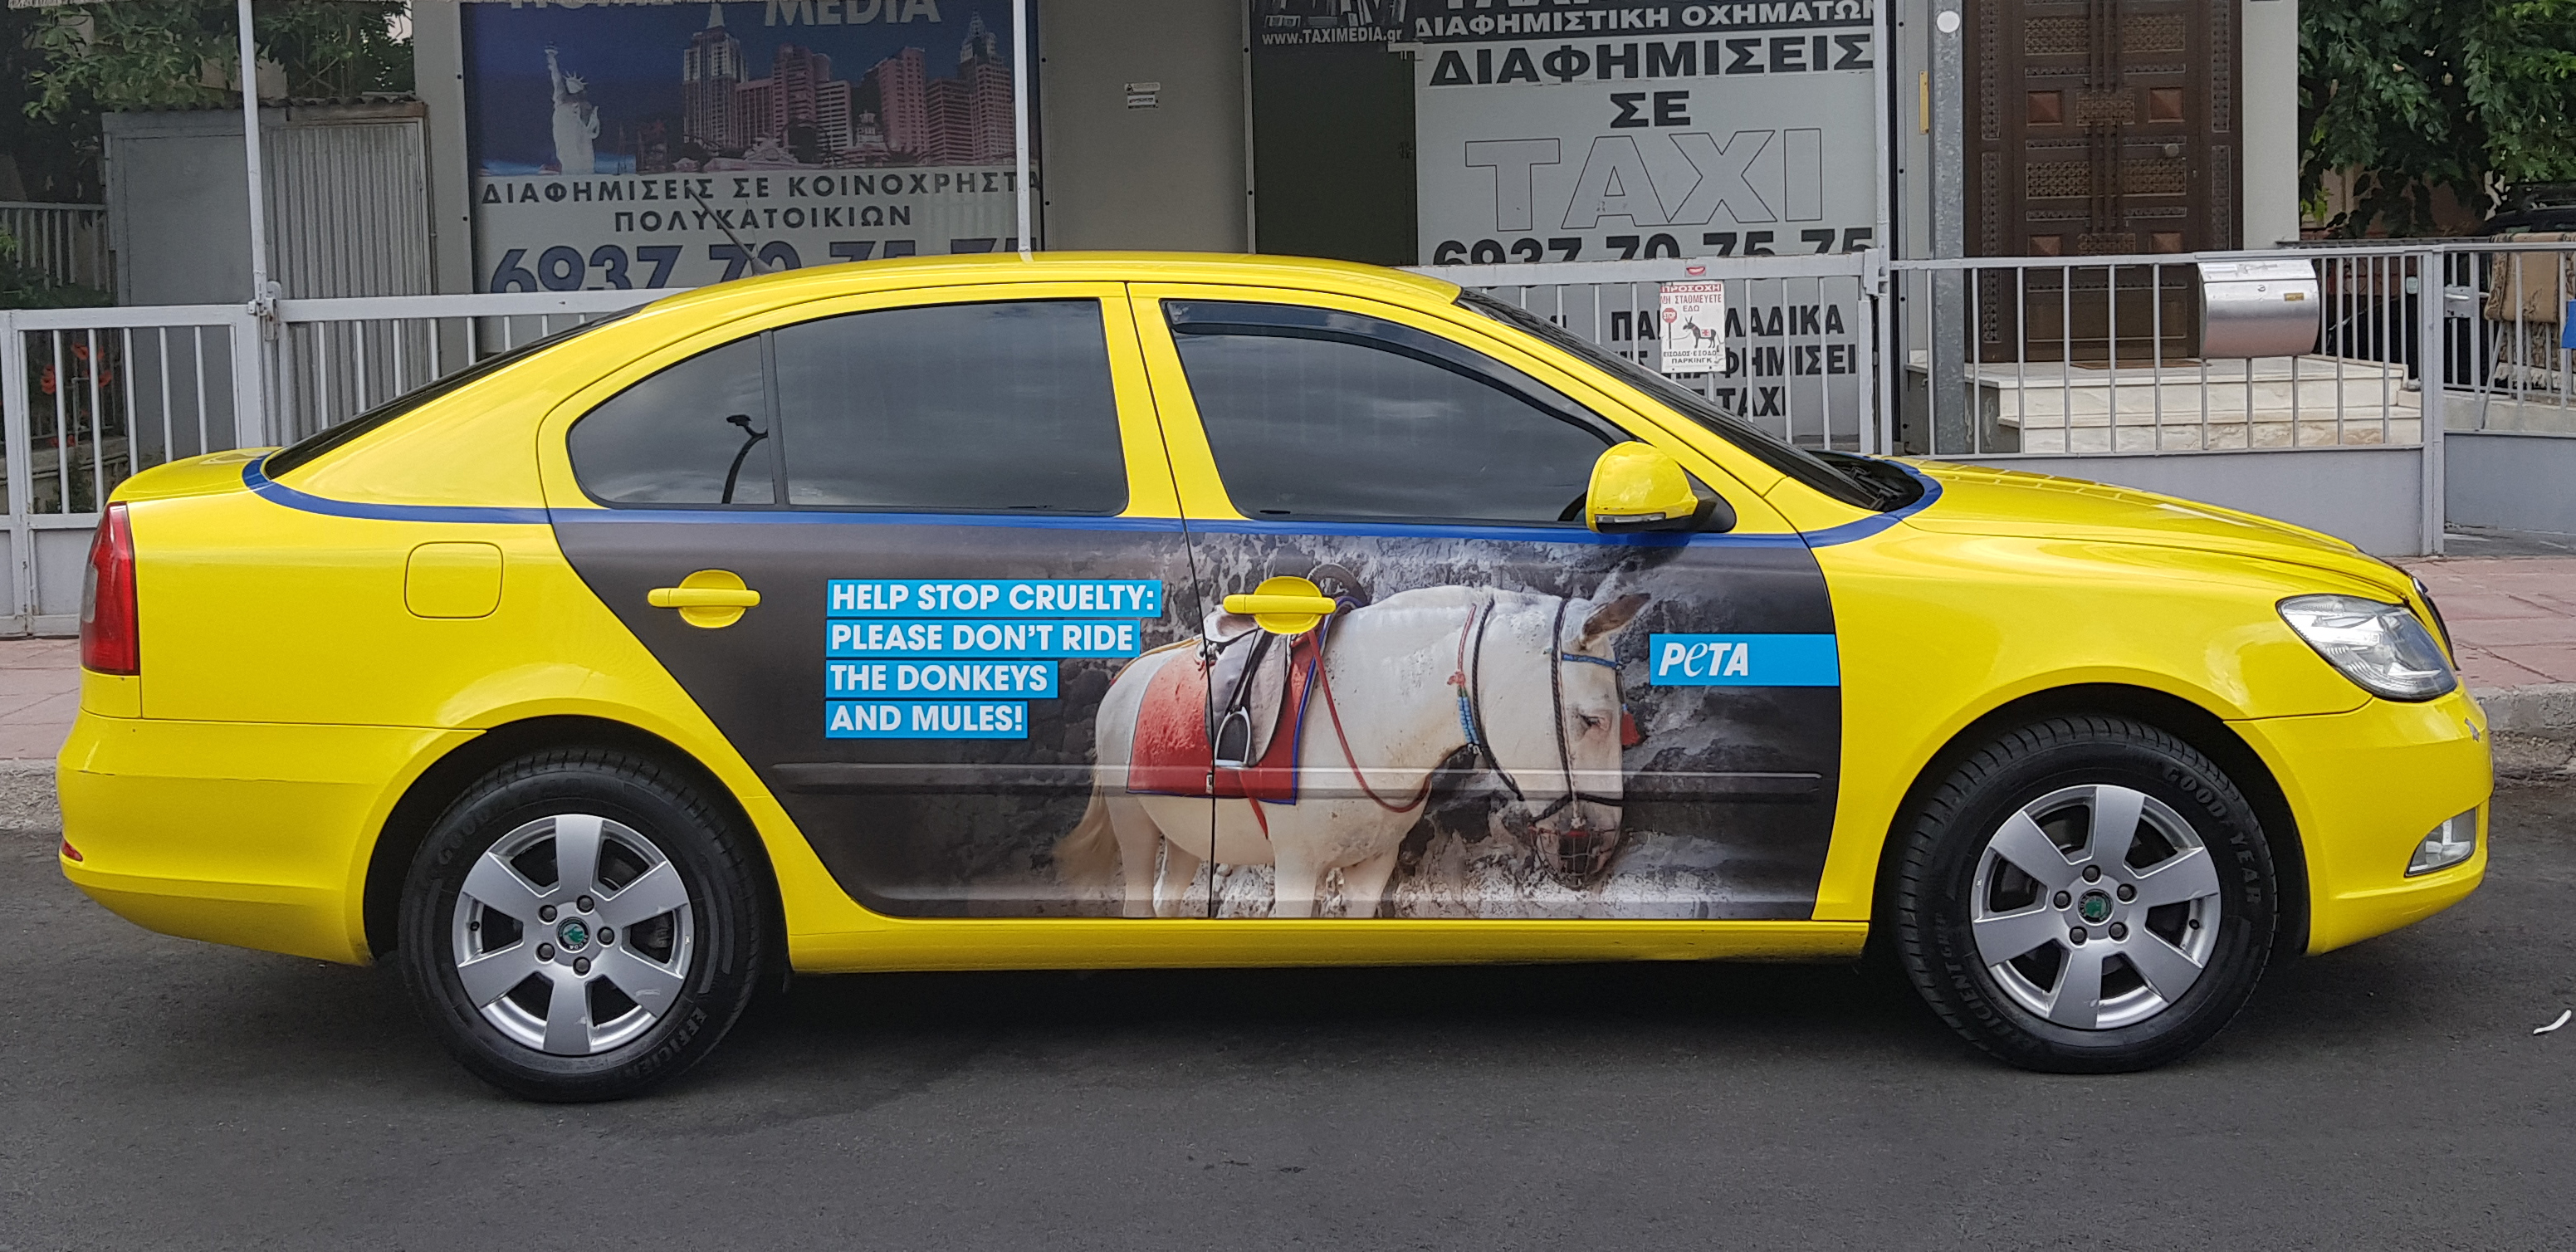 2019-Werbung-Eselreiten-Santorin-Taxi-02-c-PETA-D